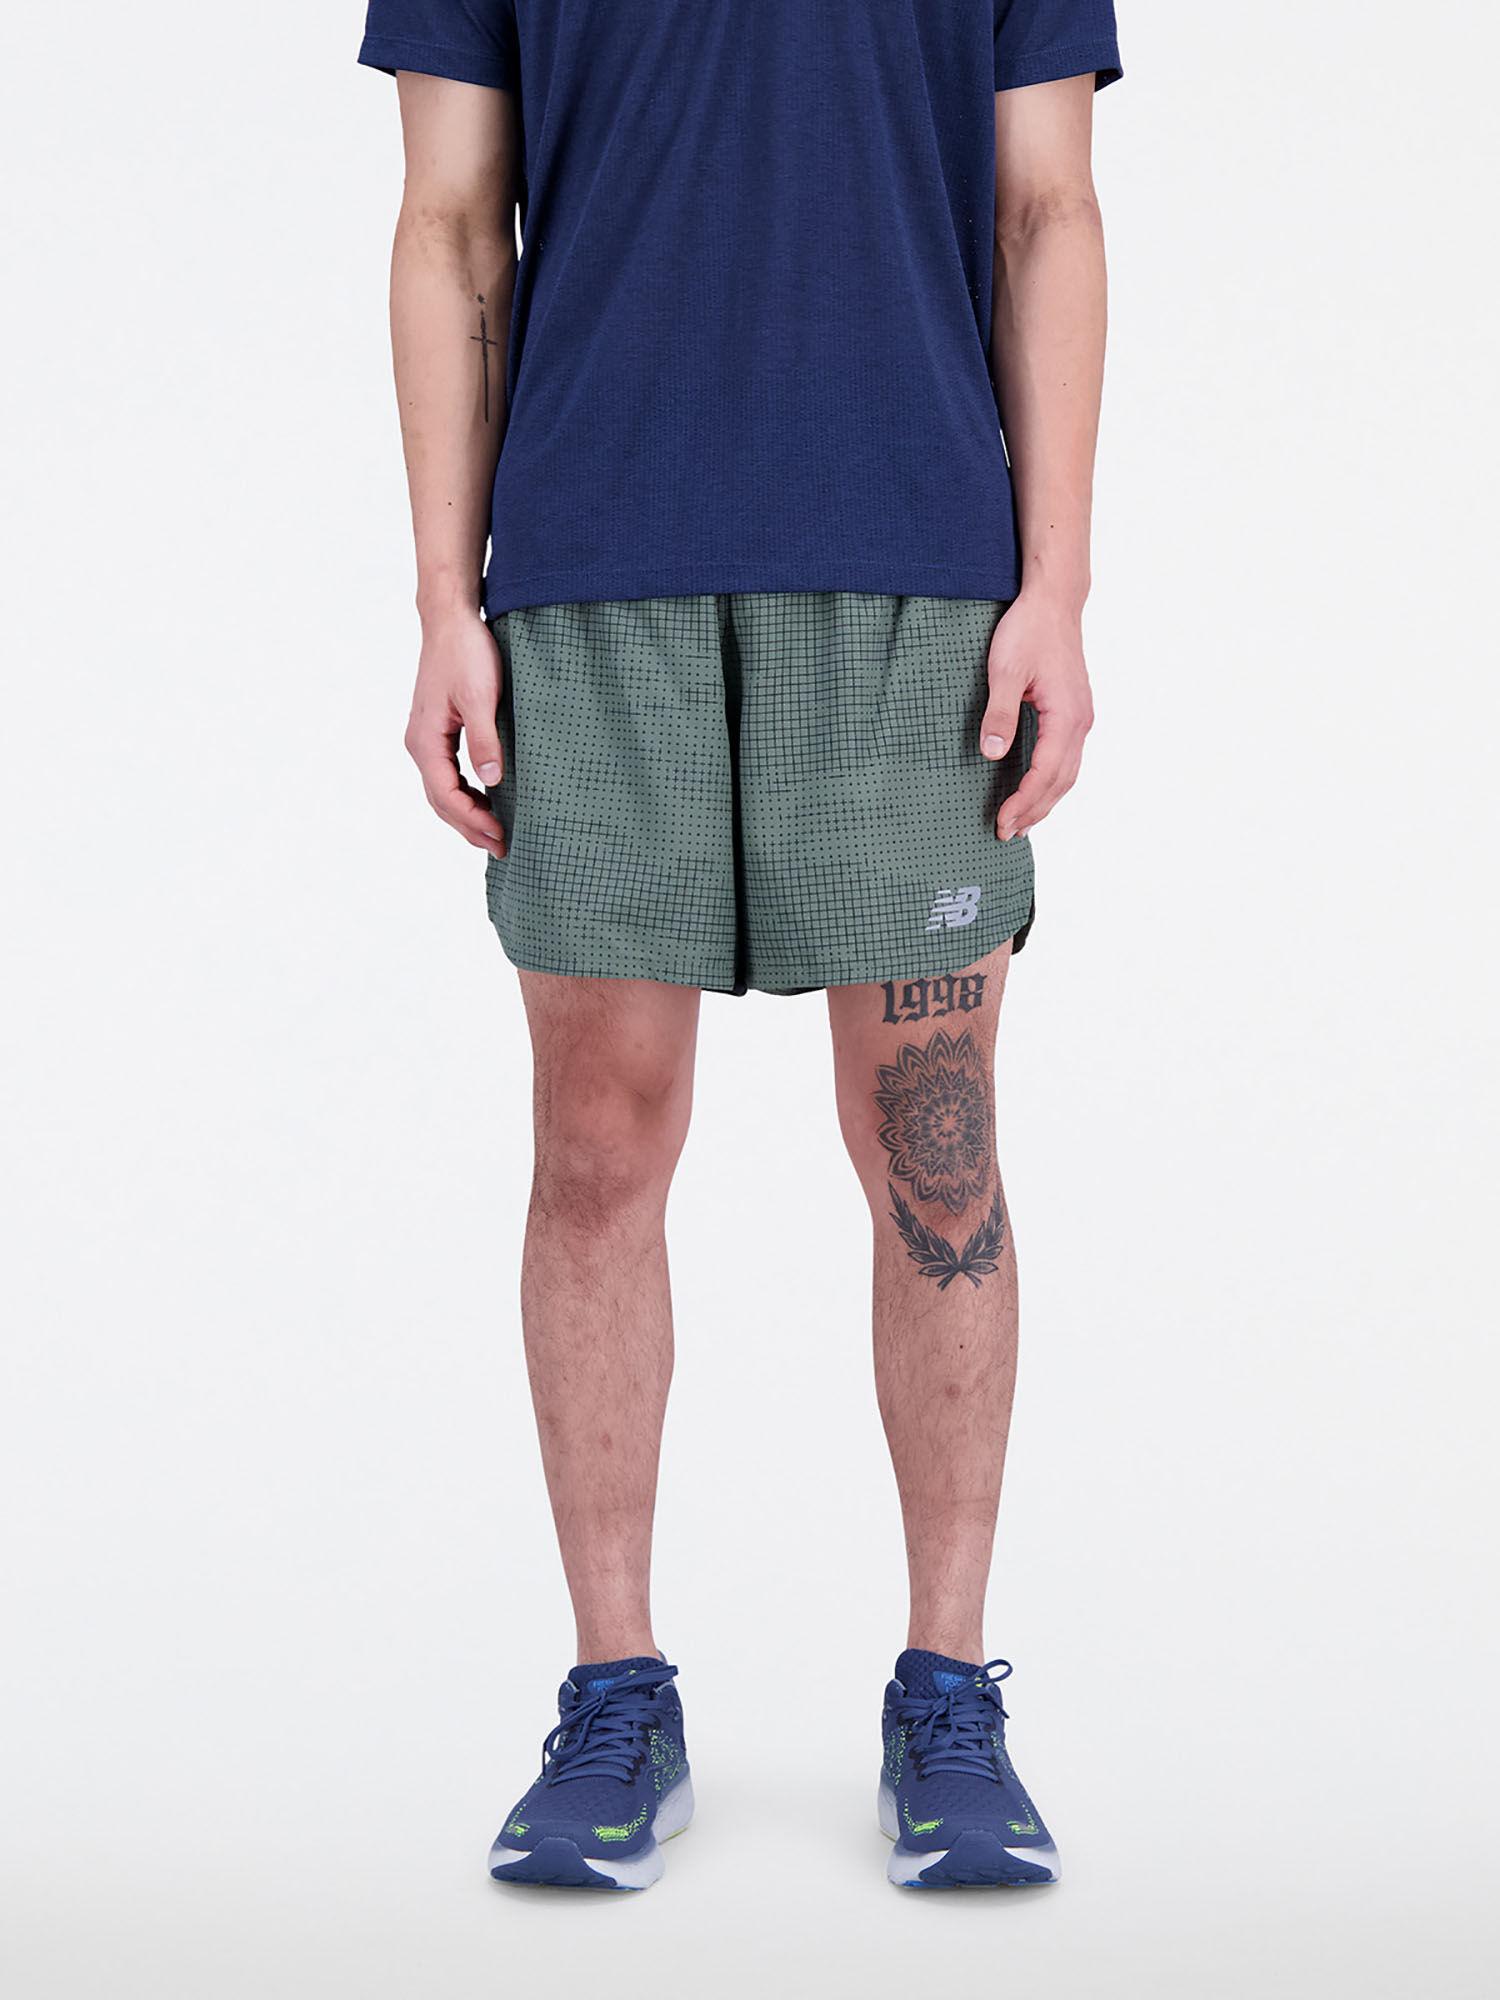 men-deep-olive-green-mid-rise-sports-shorts